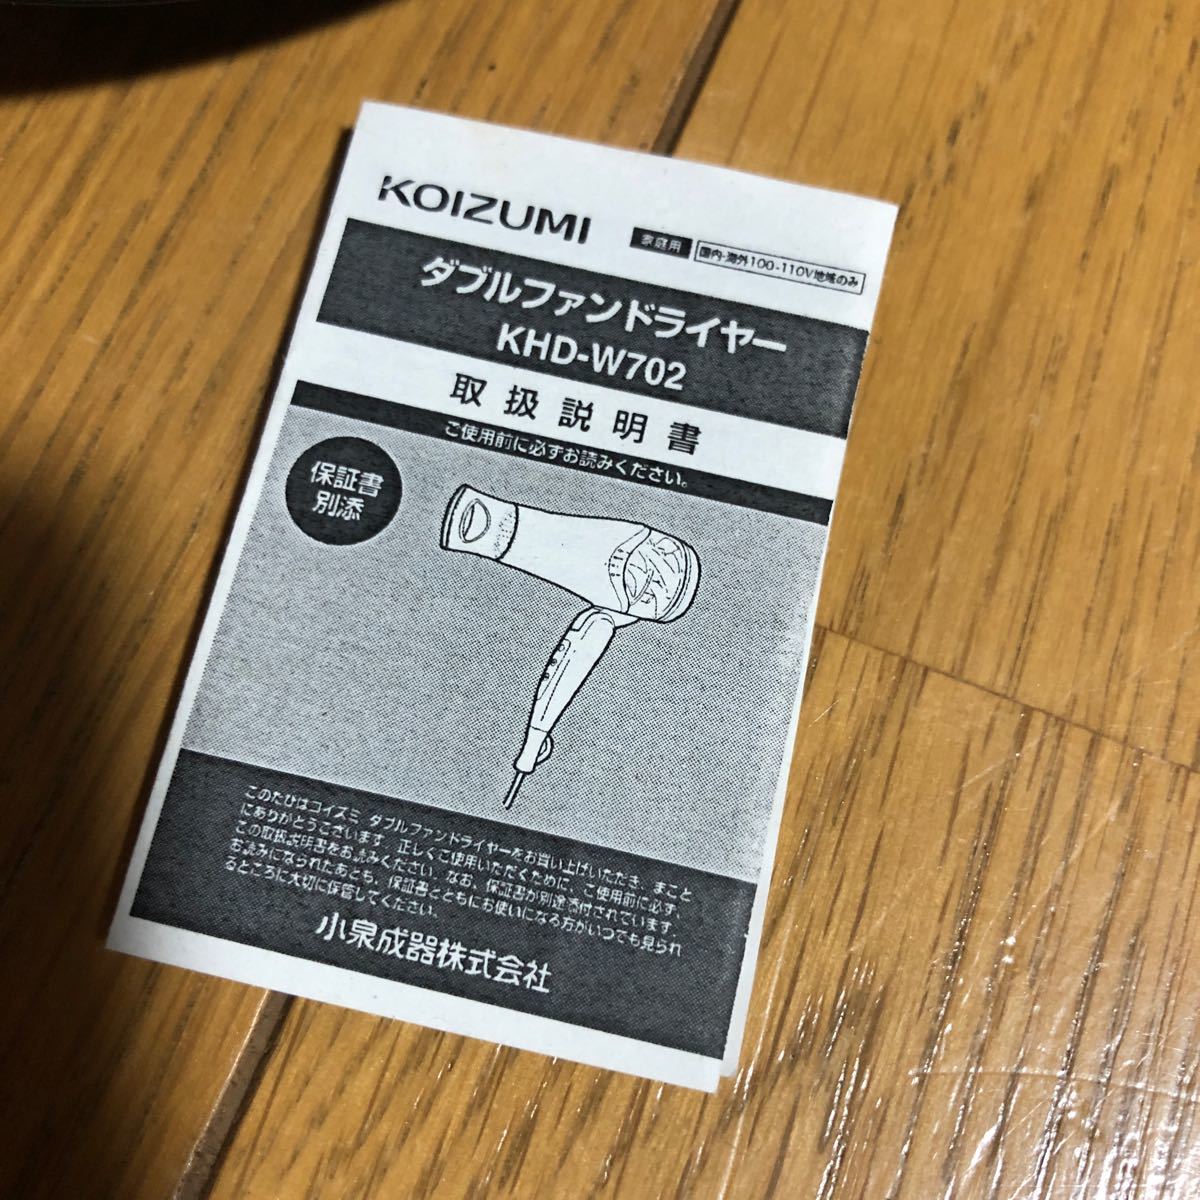 KOIZUMI  ダブルファンドライヤー   MONSTER  KHD-W702  BLACK マイナスイオン